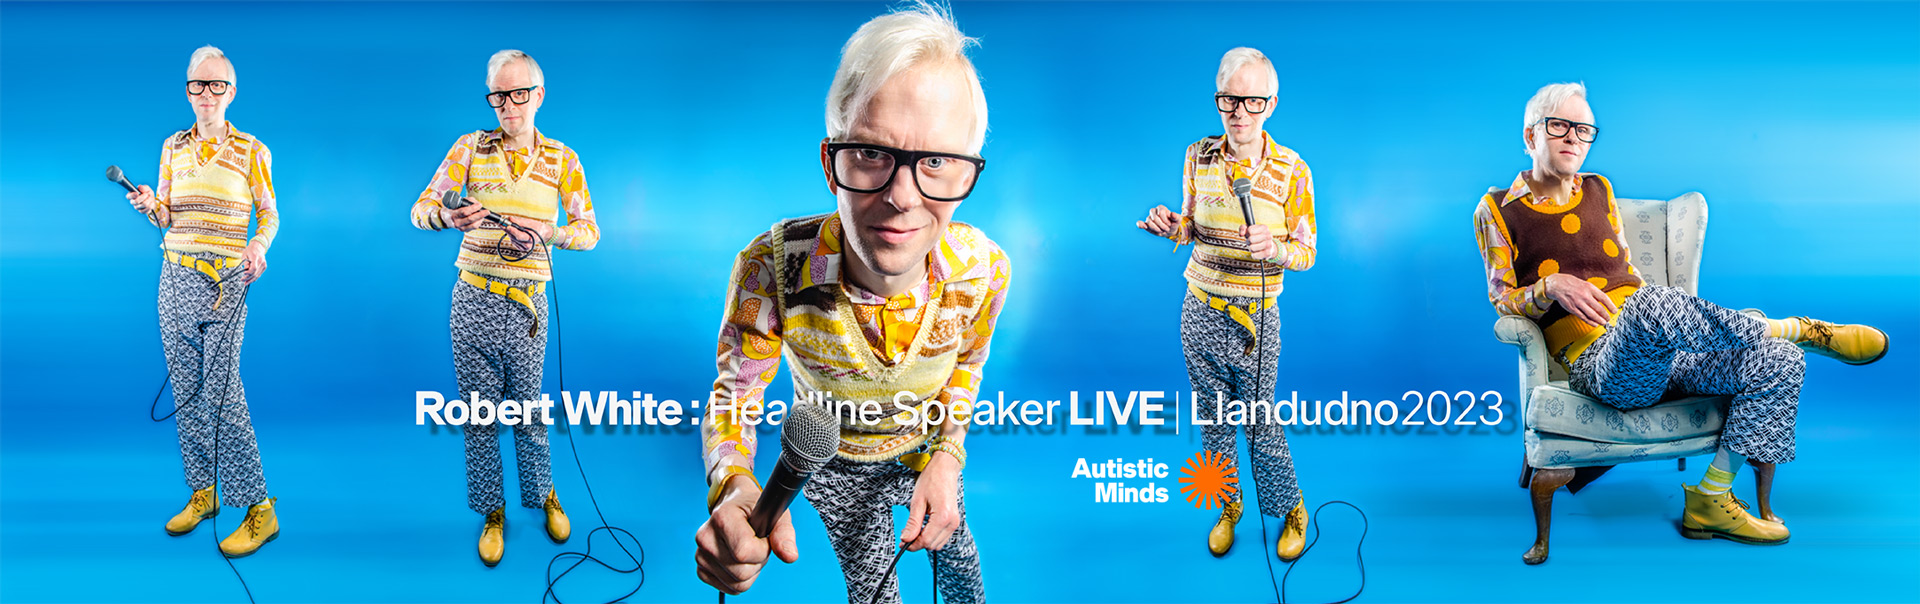 Robert White is headlining Autistic Minds Live Llandudno 2023